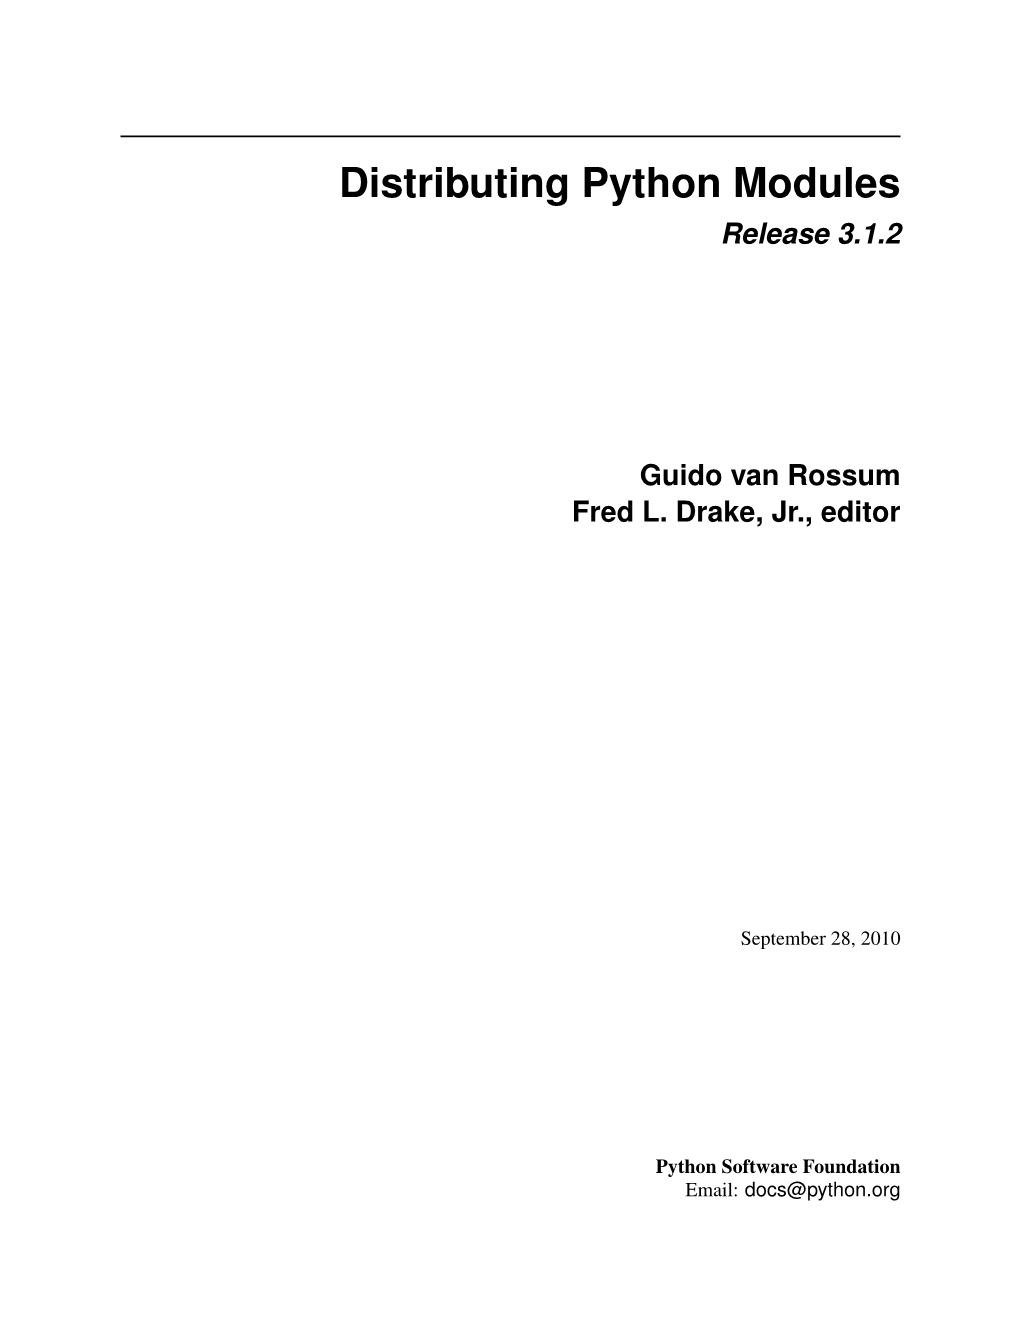 Distributing Python Modules Release 3.1.2